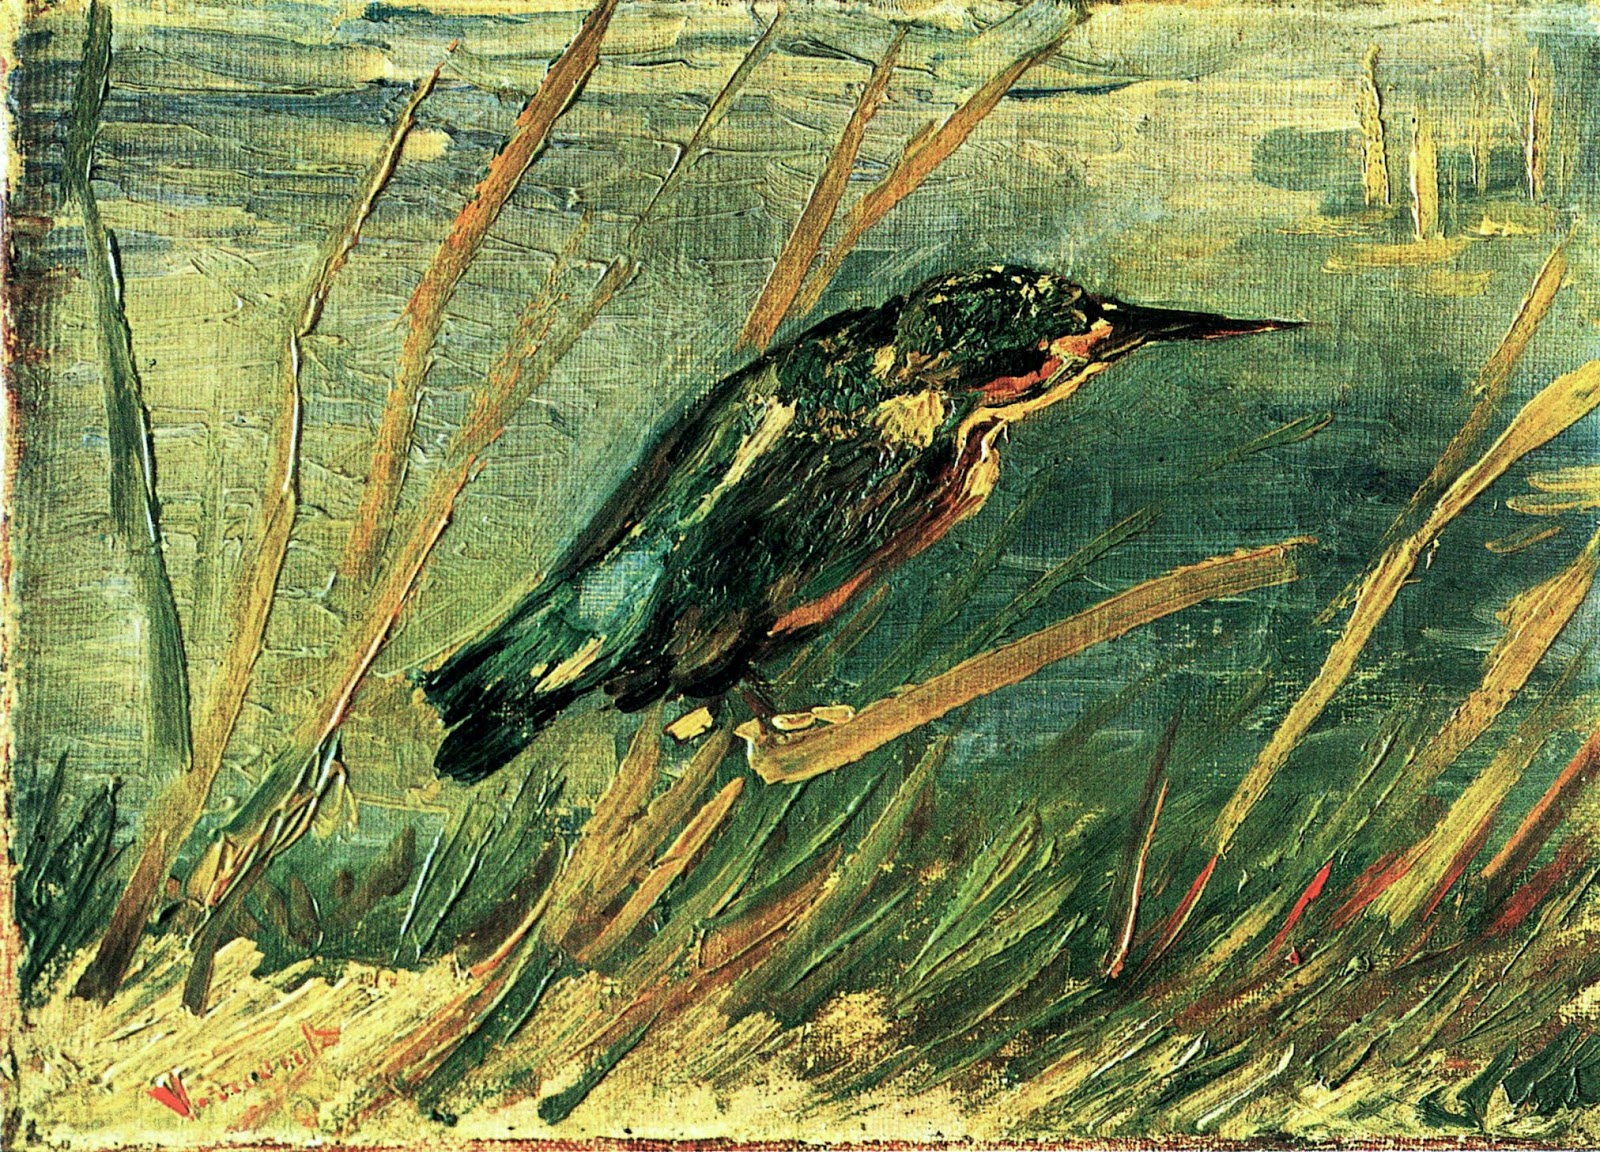 Vincent+Van+Gogh-1853-1890 (809).jpg